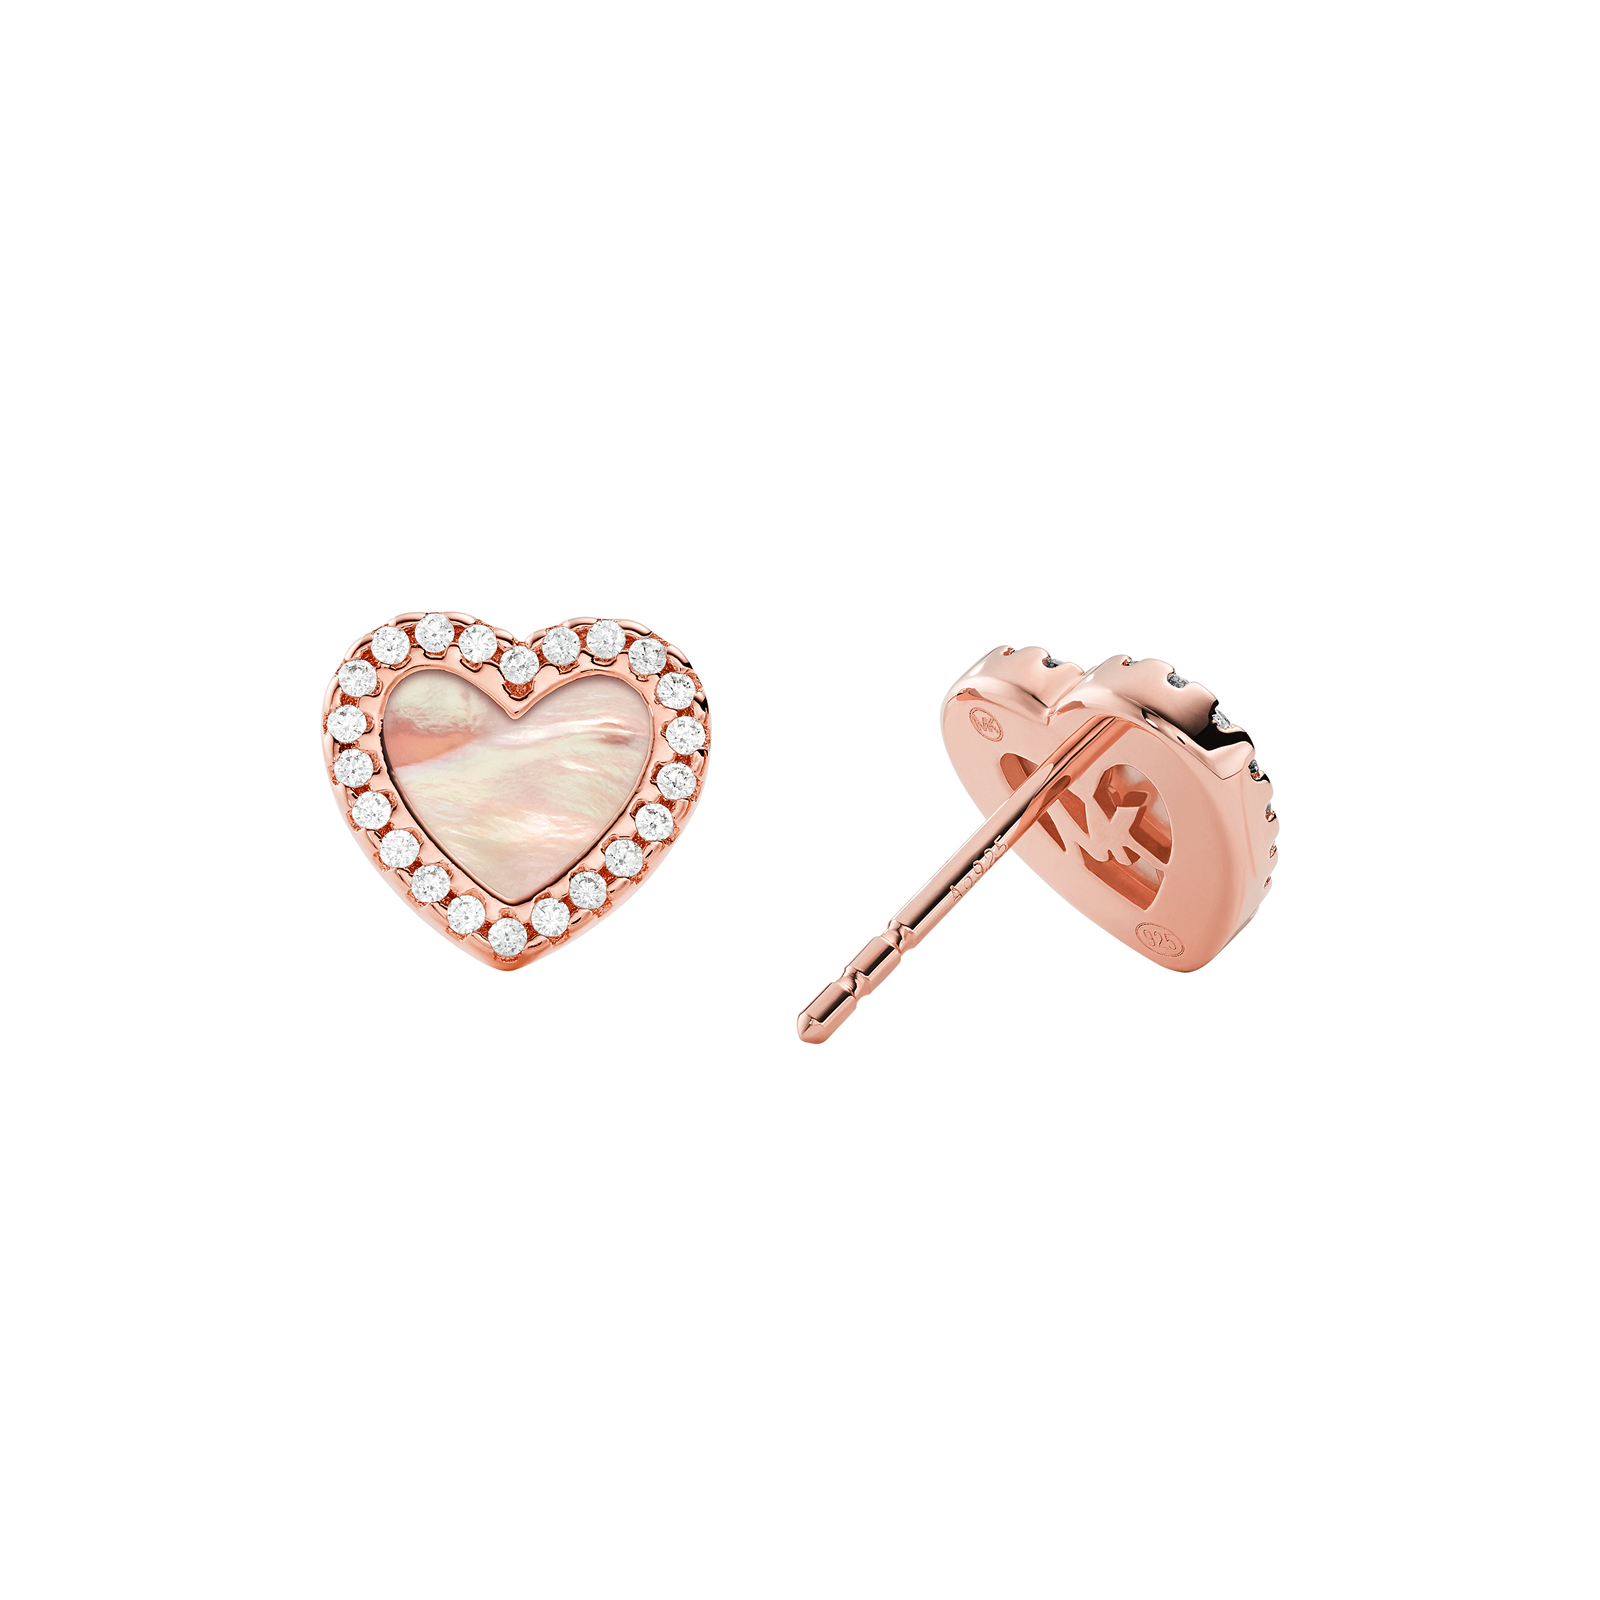 michael kors heart earrings